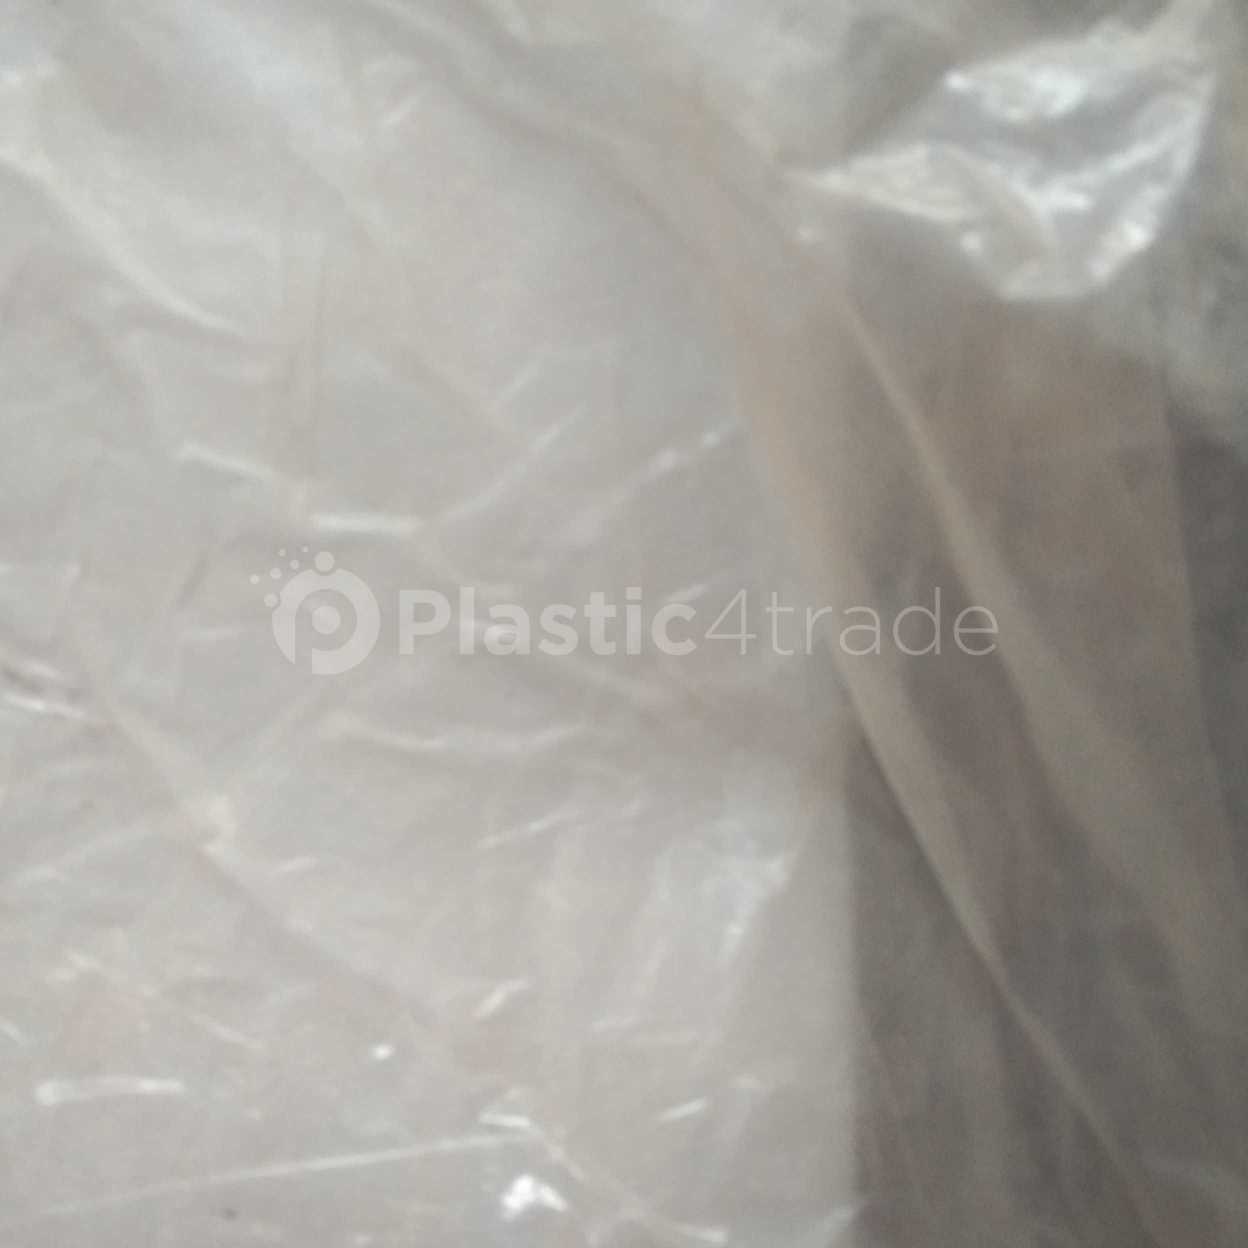 LDPE LDPE Scrap Mix Scrap haryana india Plastic4trade